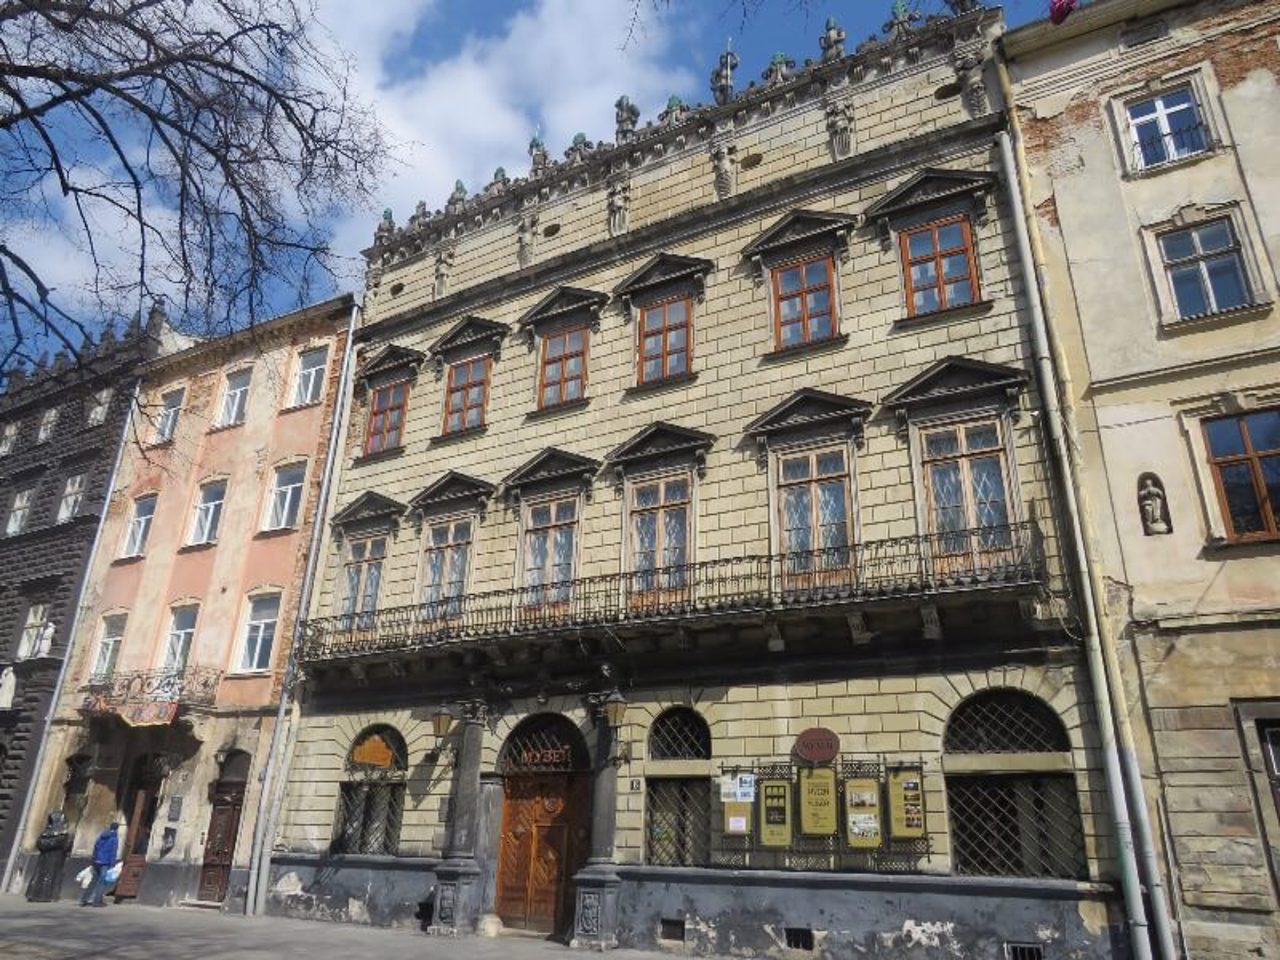 Kornyakt Palace (Italian Courtyard), Lviv